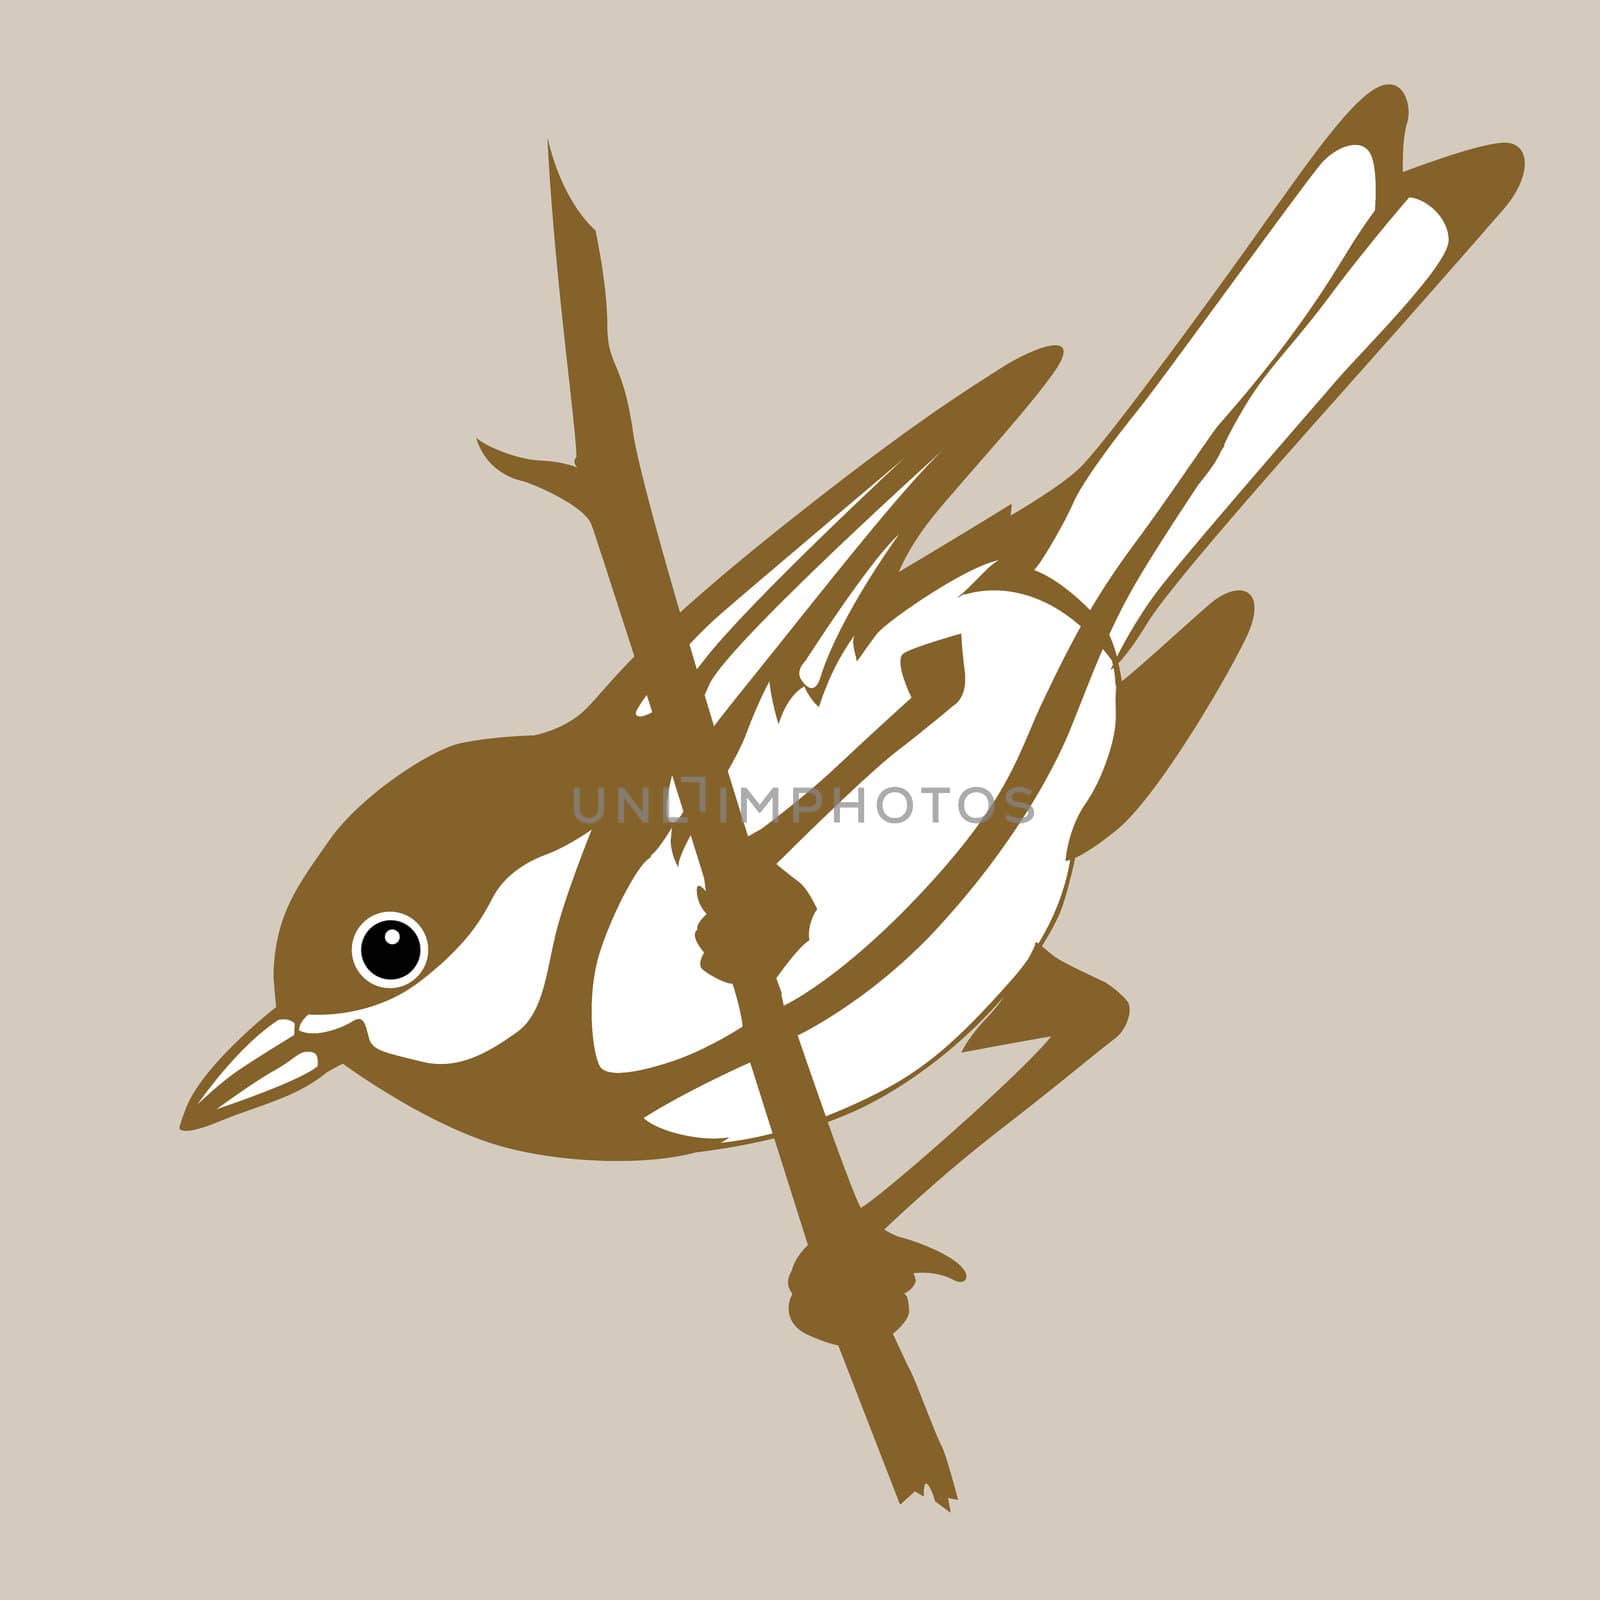 bird silhouette on brown background, vector illustration